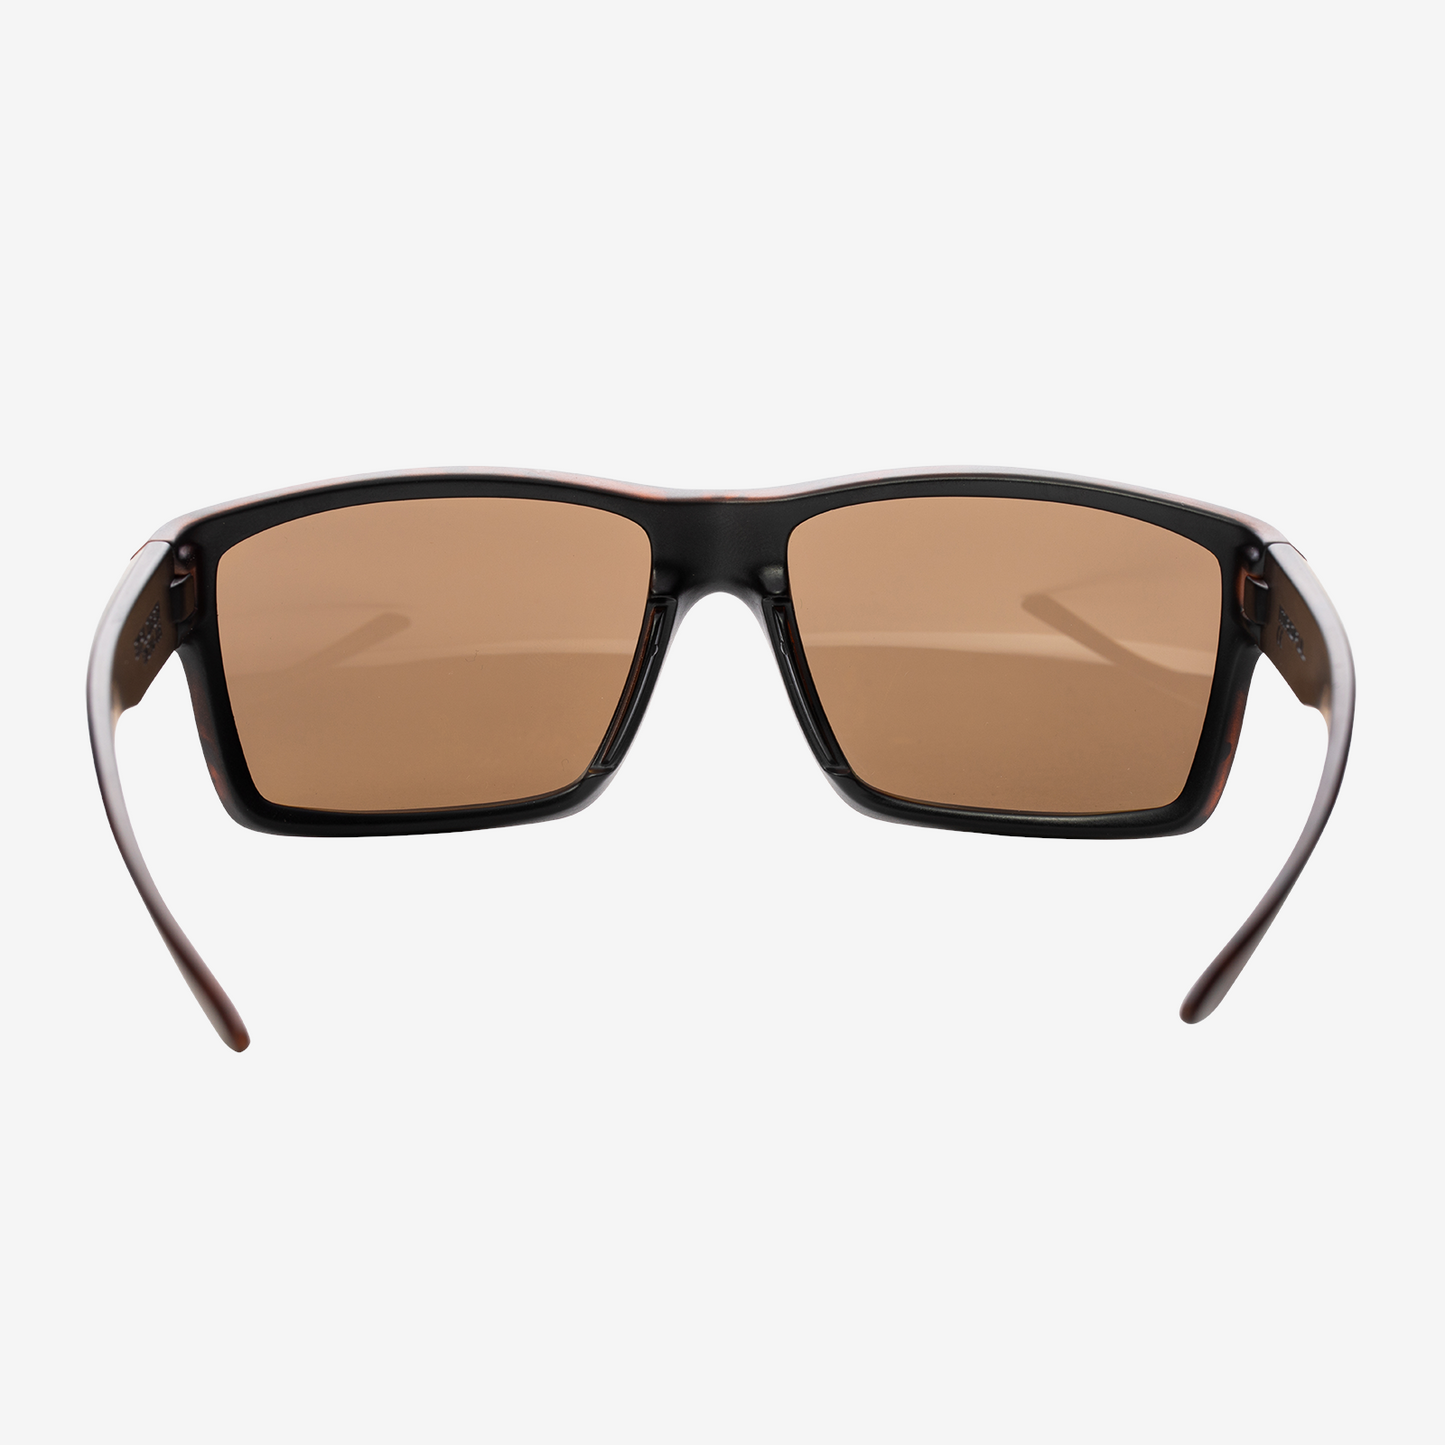 MAGPUL Explorer Polarized Ballistic Sunglasses Tortoise Frame/Bronze Gold Mirror Lens